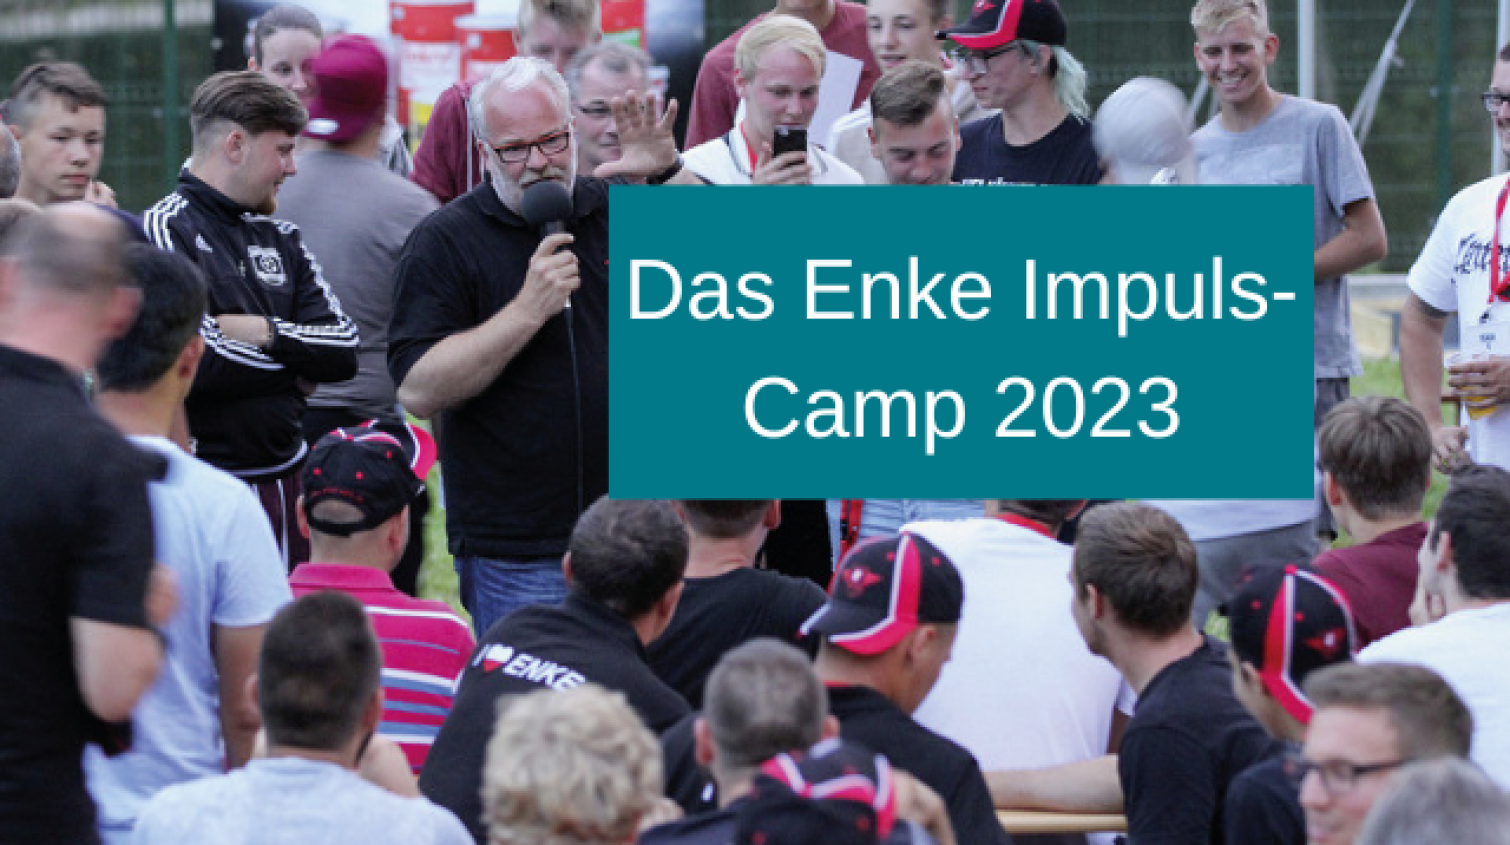 Das Enke Impuls-Camp 2023